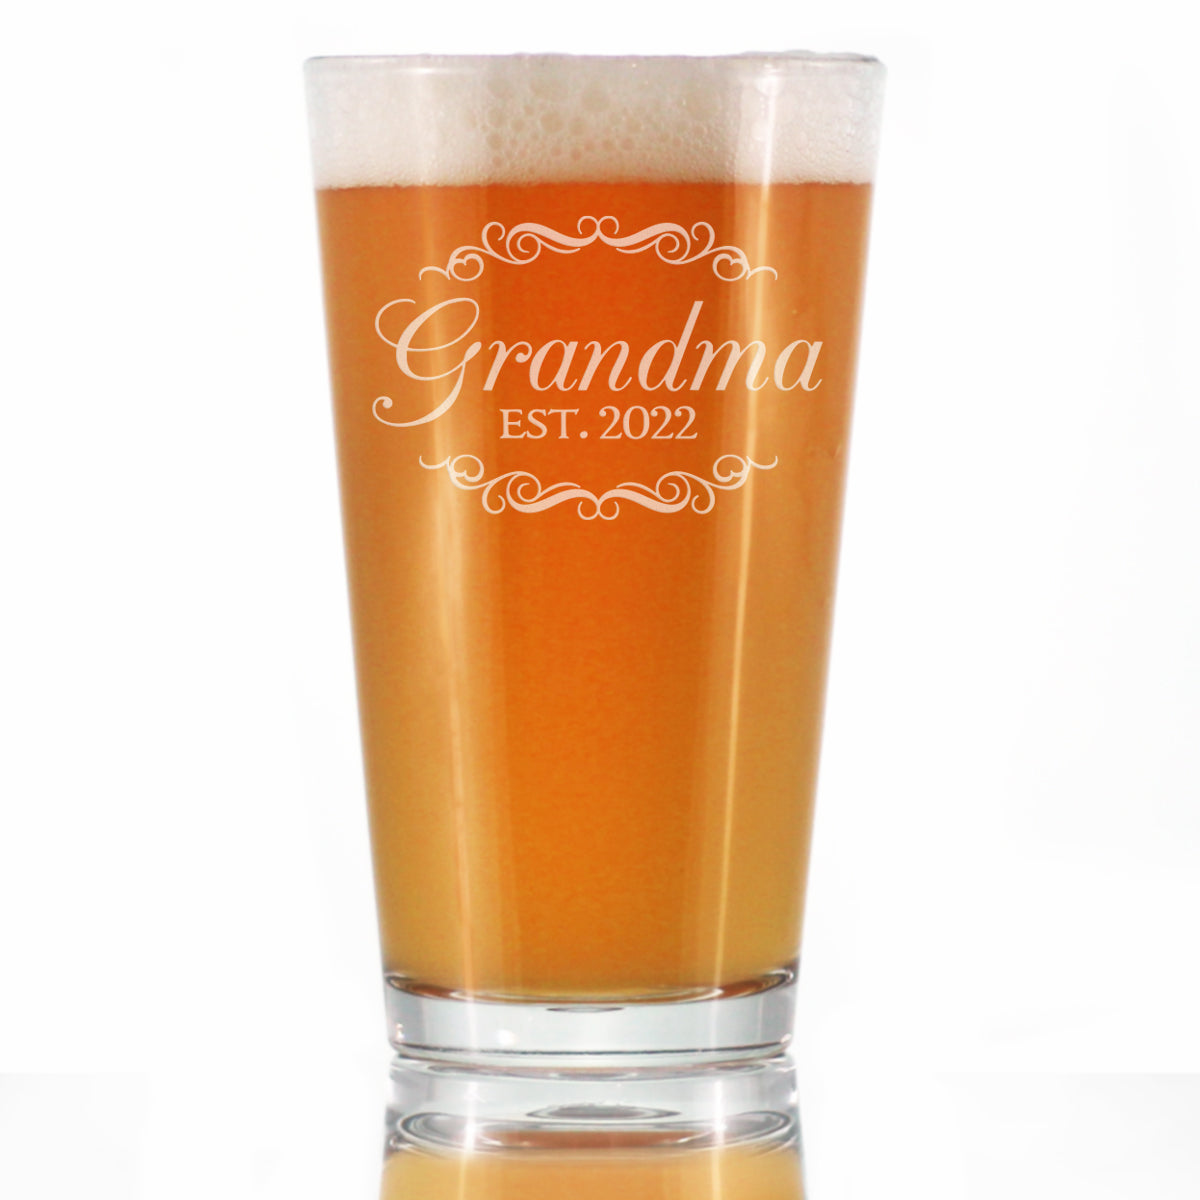 Grandma Est 2022 - New Grandmother Pint Glass Gift for First Time Grandparents - Decorative 16 Oz Glasses